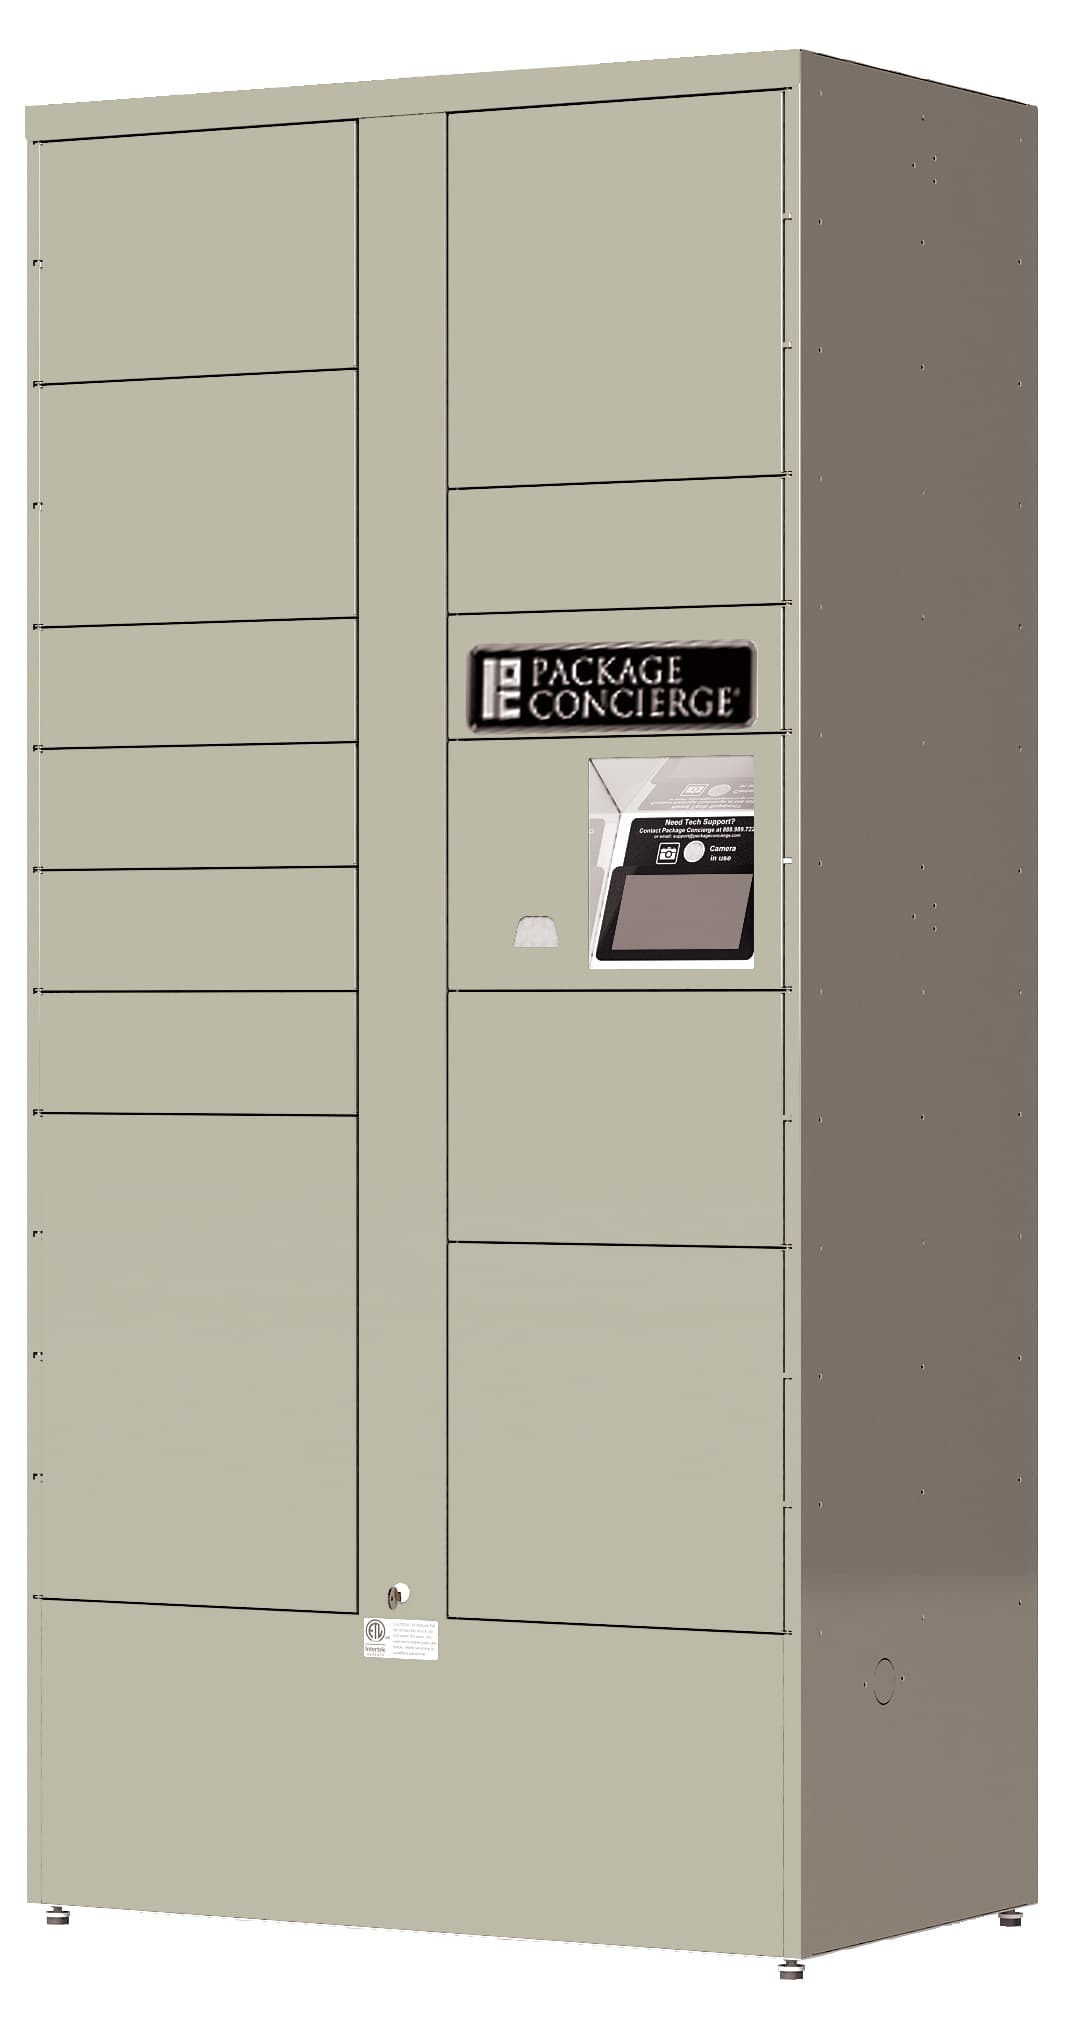 automated package locker kiosk